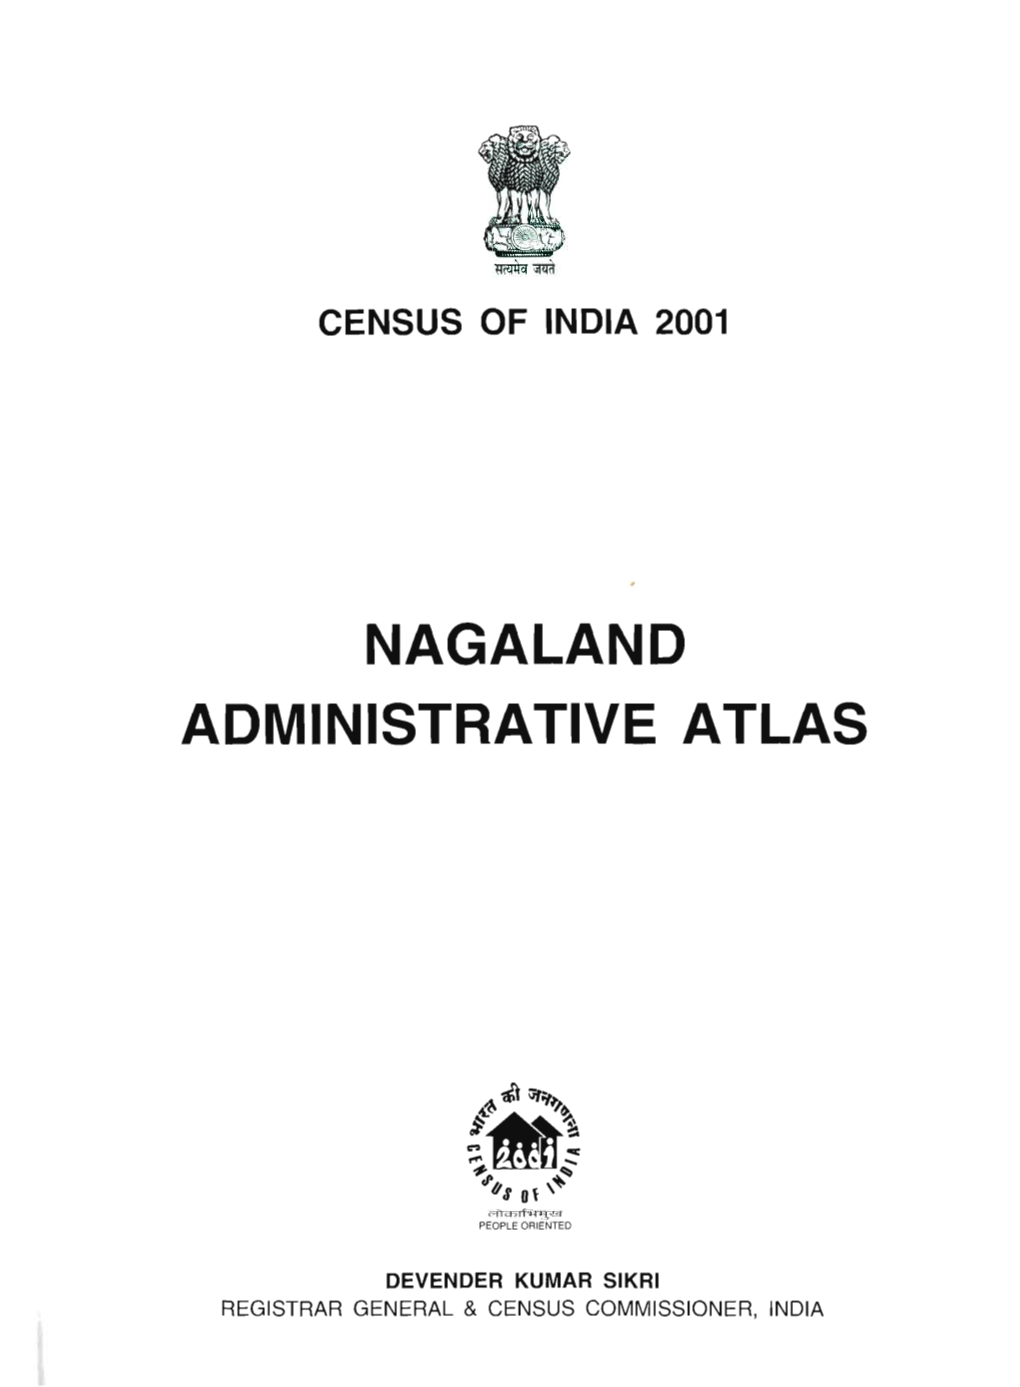 Nagaland Administrative Atlas